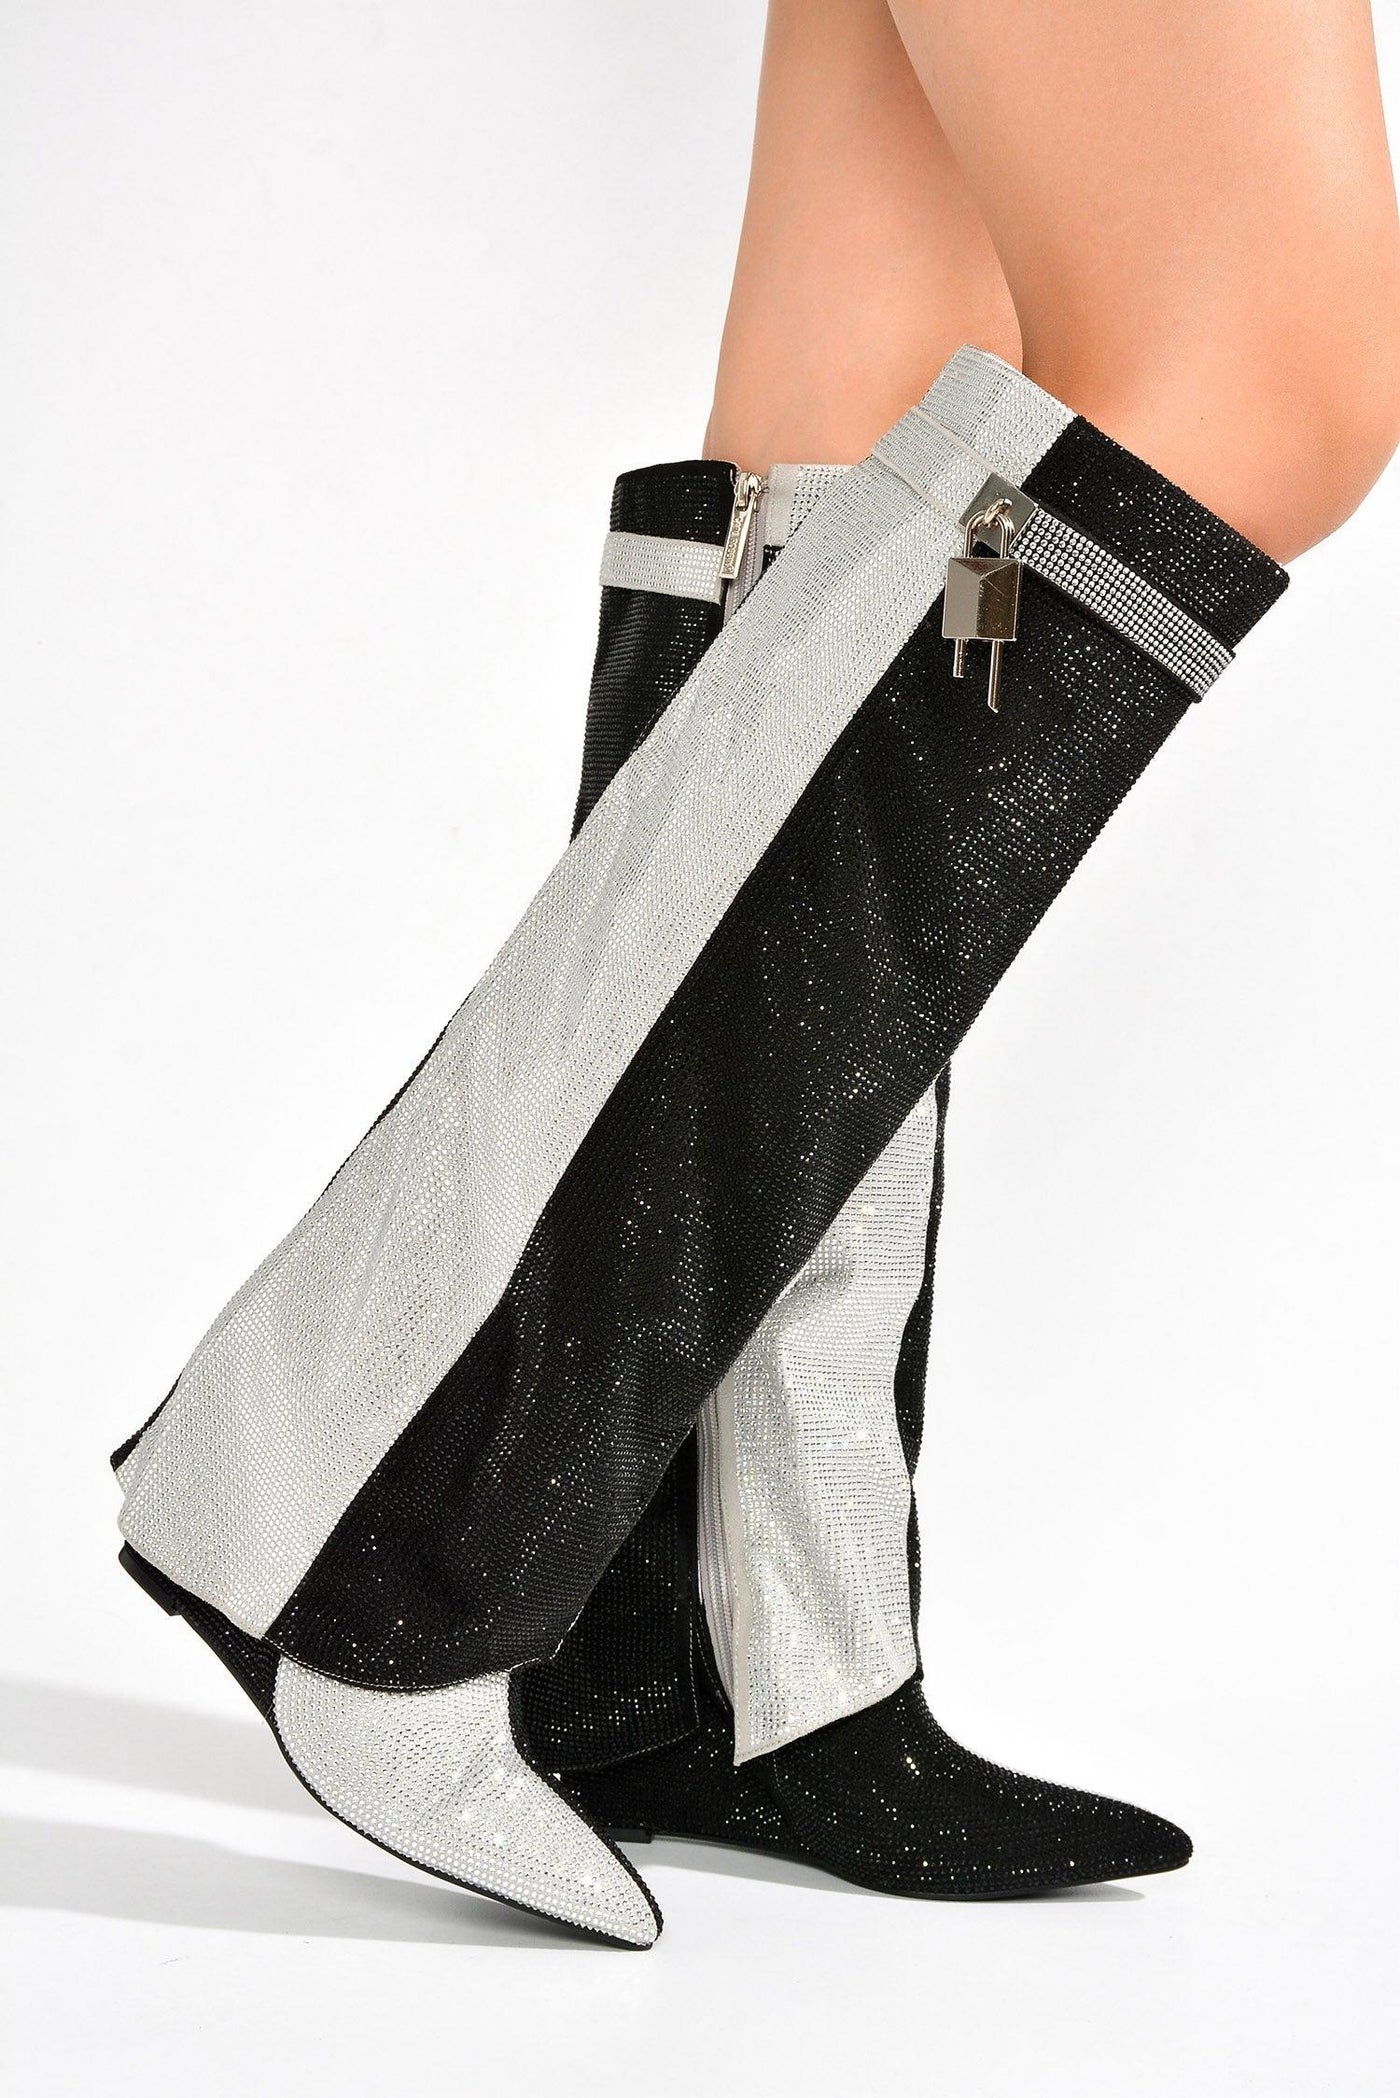 ANITTA - BLACK Thigh High Boots - AMIClubwear